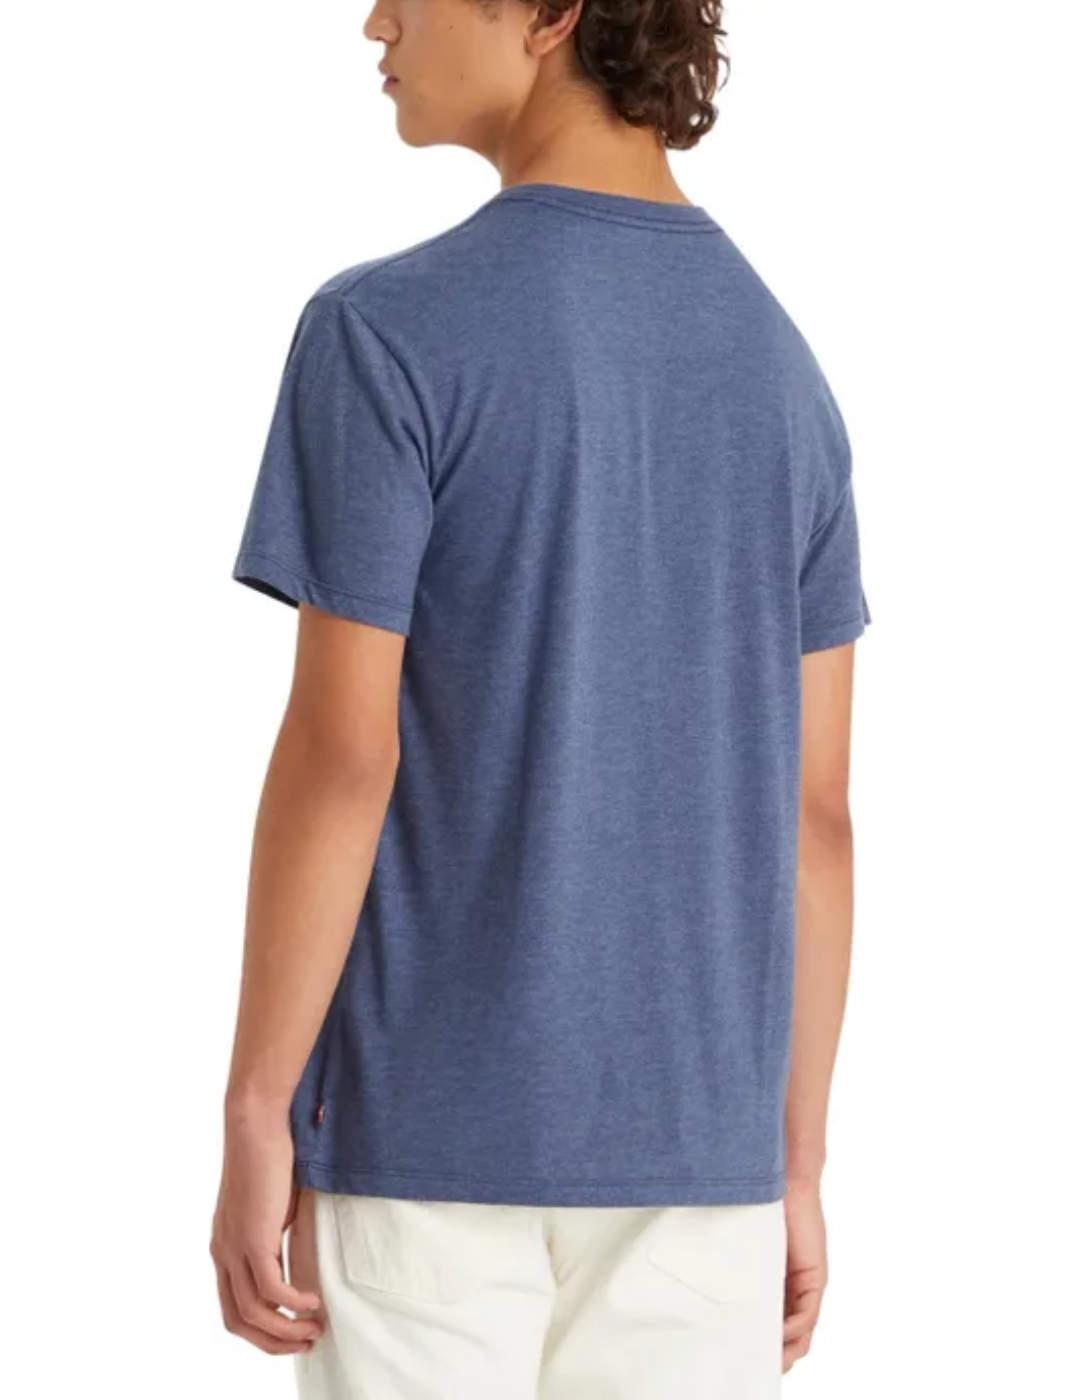 Camiseta Levi's Graphic Tee color azul manga corta hombre